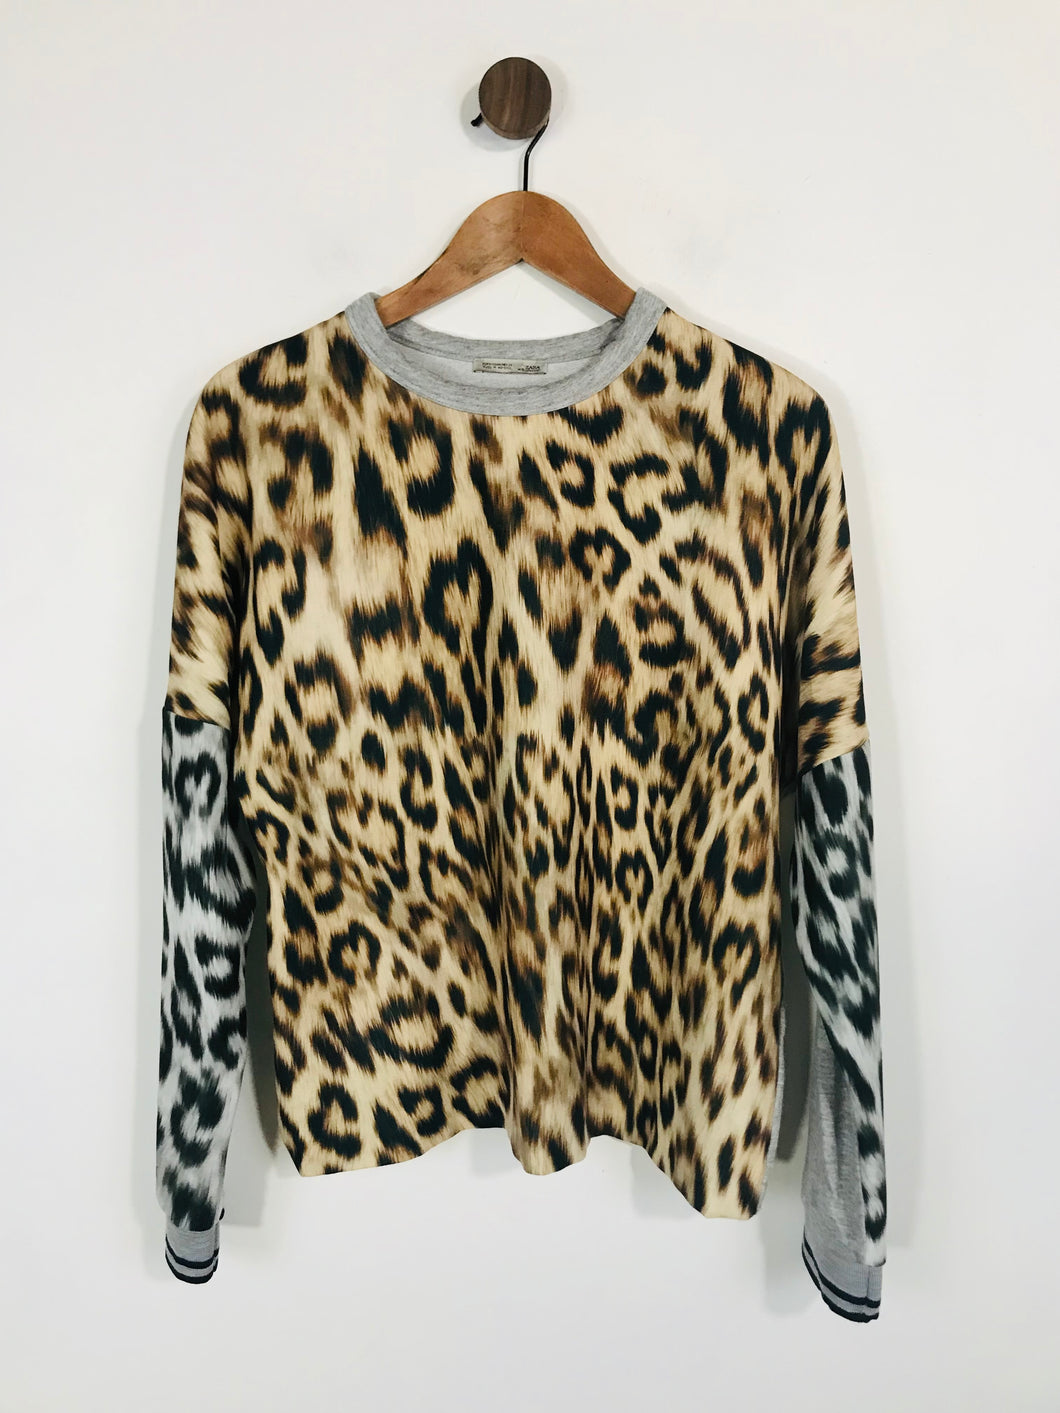 Zara Women's Long Sleeve Leopard Print T-Shirt | M UK10-12 | Multicoloured